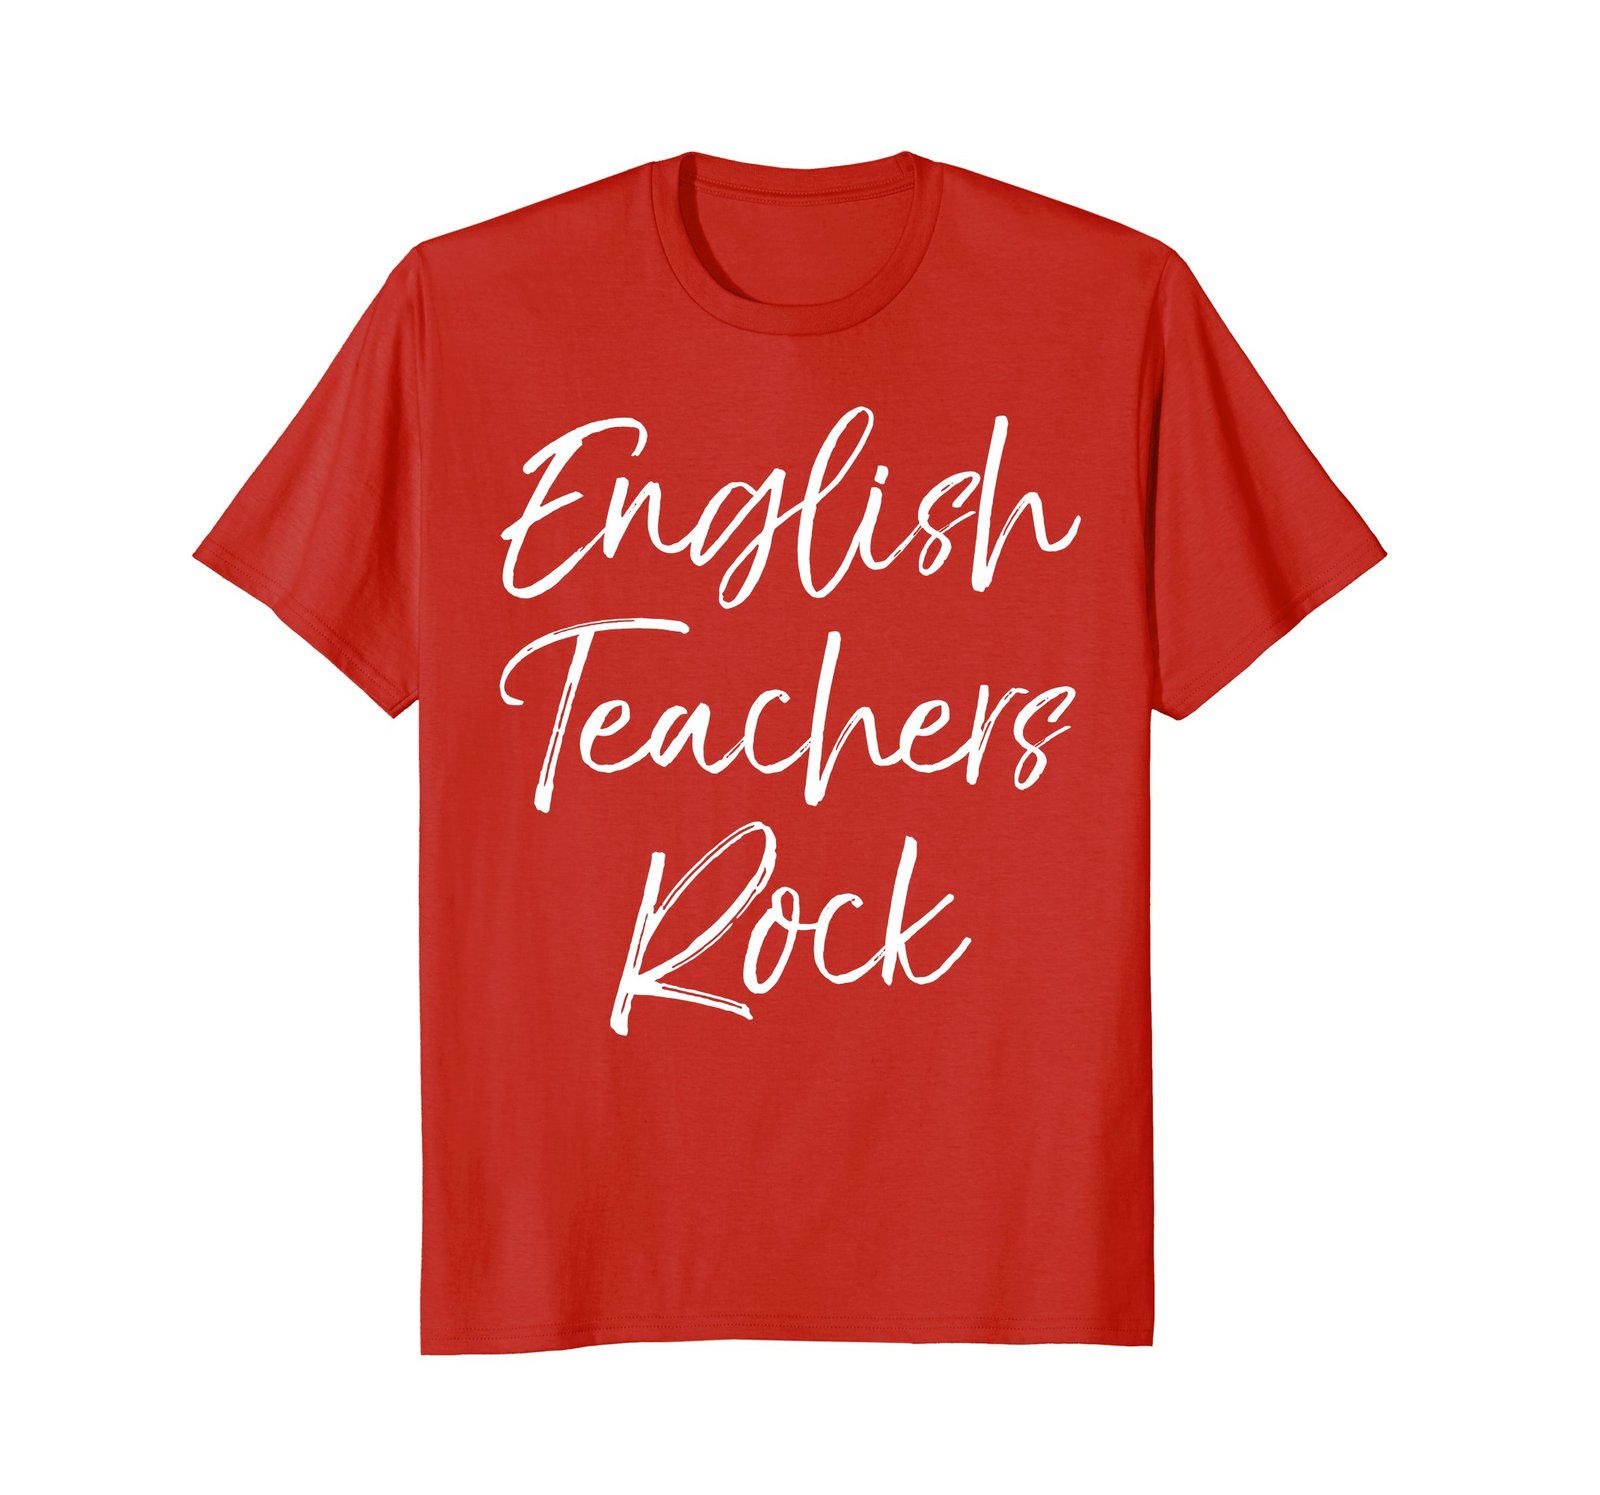 Funny Shirts - English Teachers Rock Shirt Cool Teaching End of School Gift Men